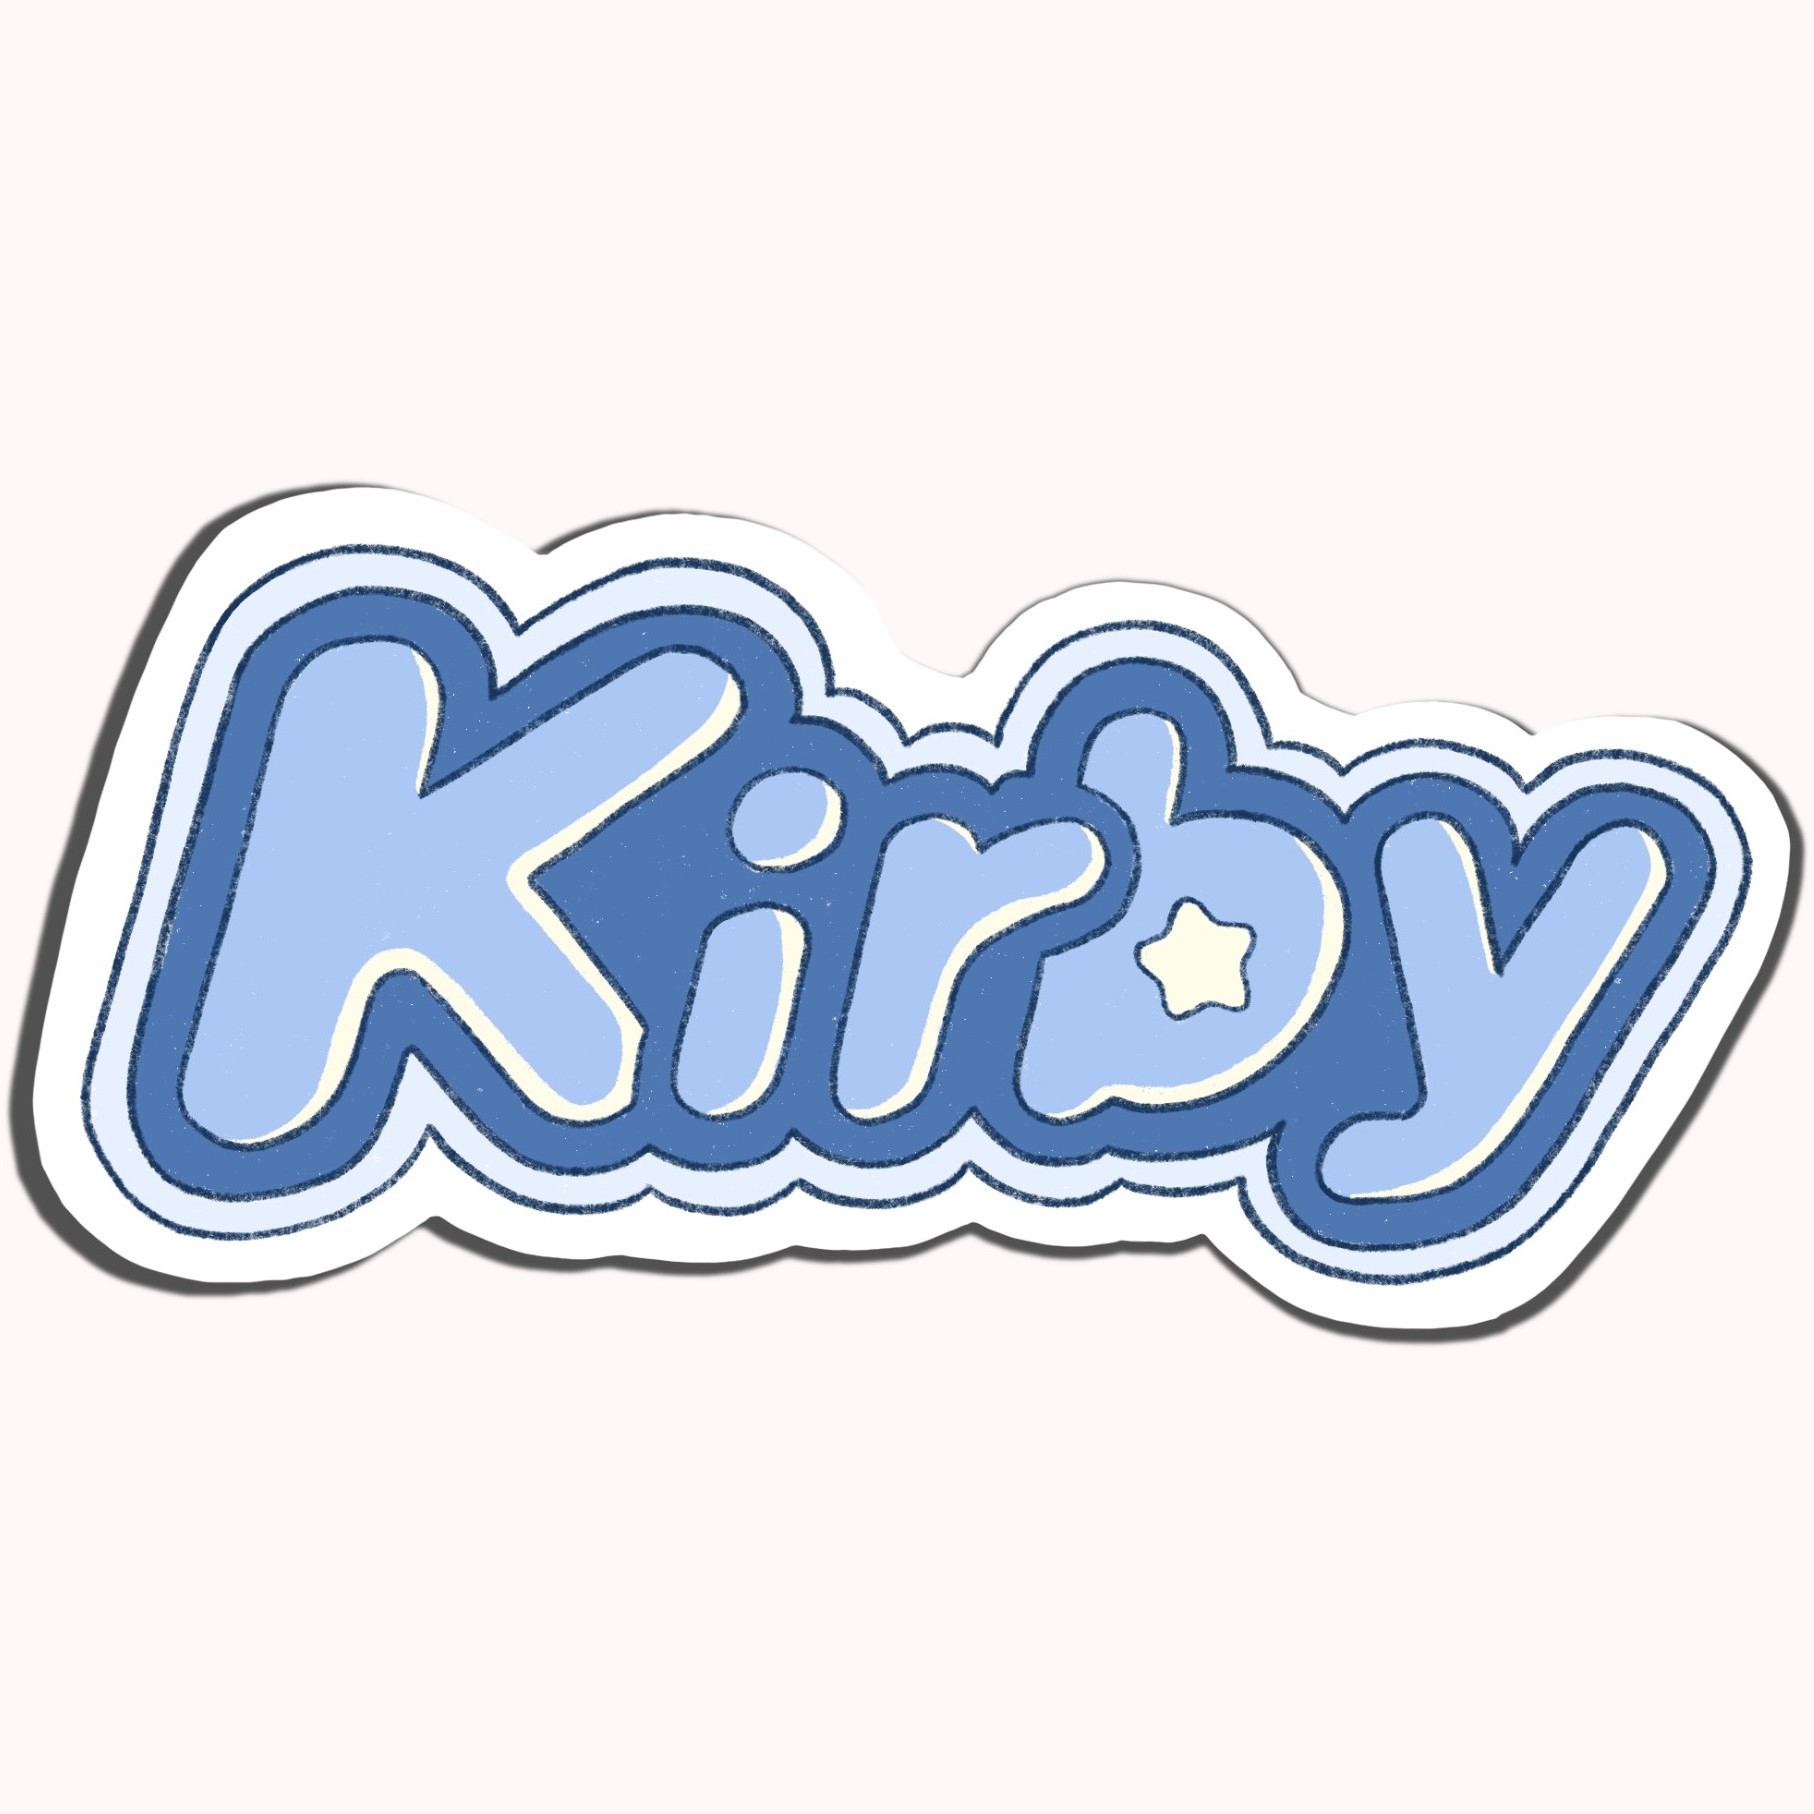 Kirby logo sticker design. Shows Kirby logo in a monochromatic blue color scheme.